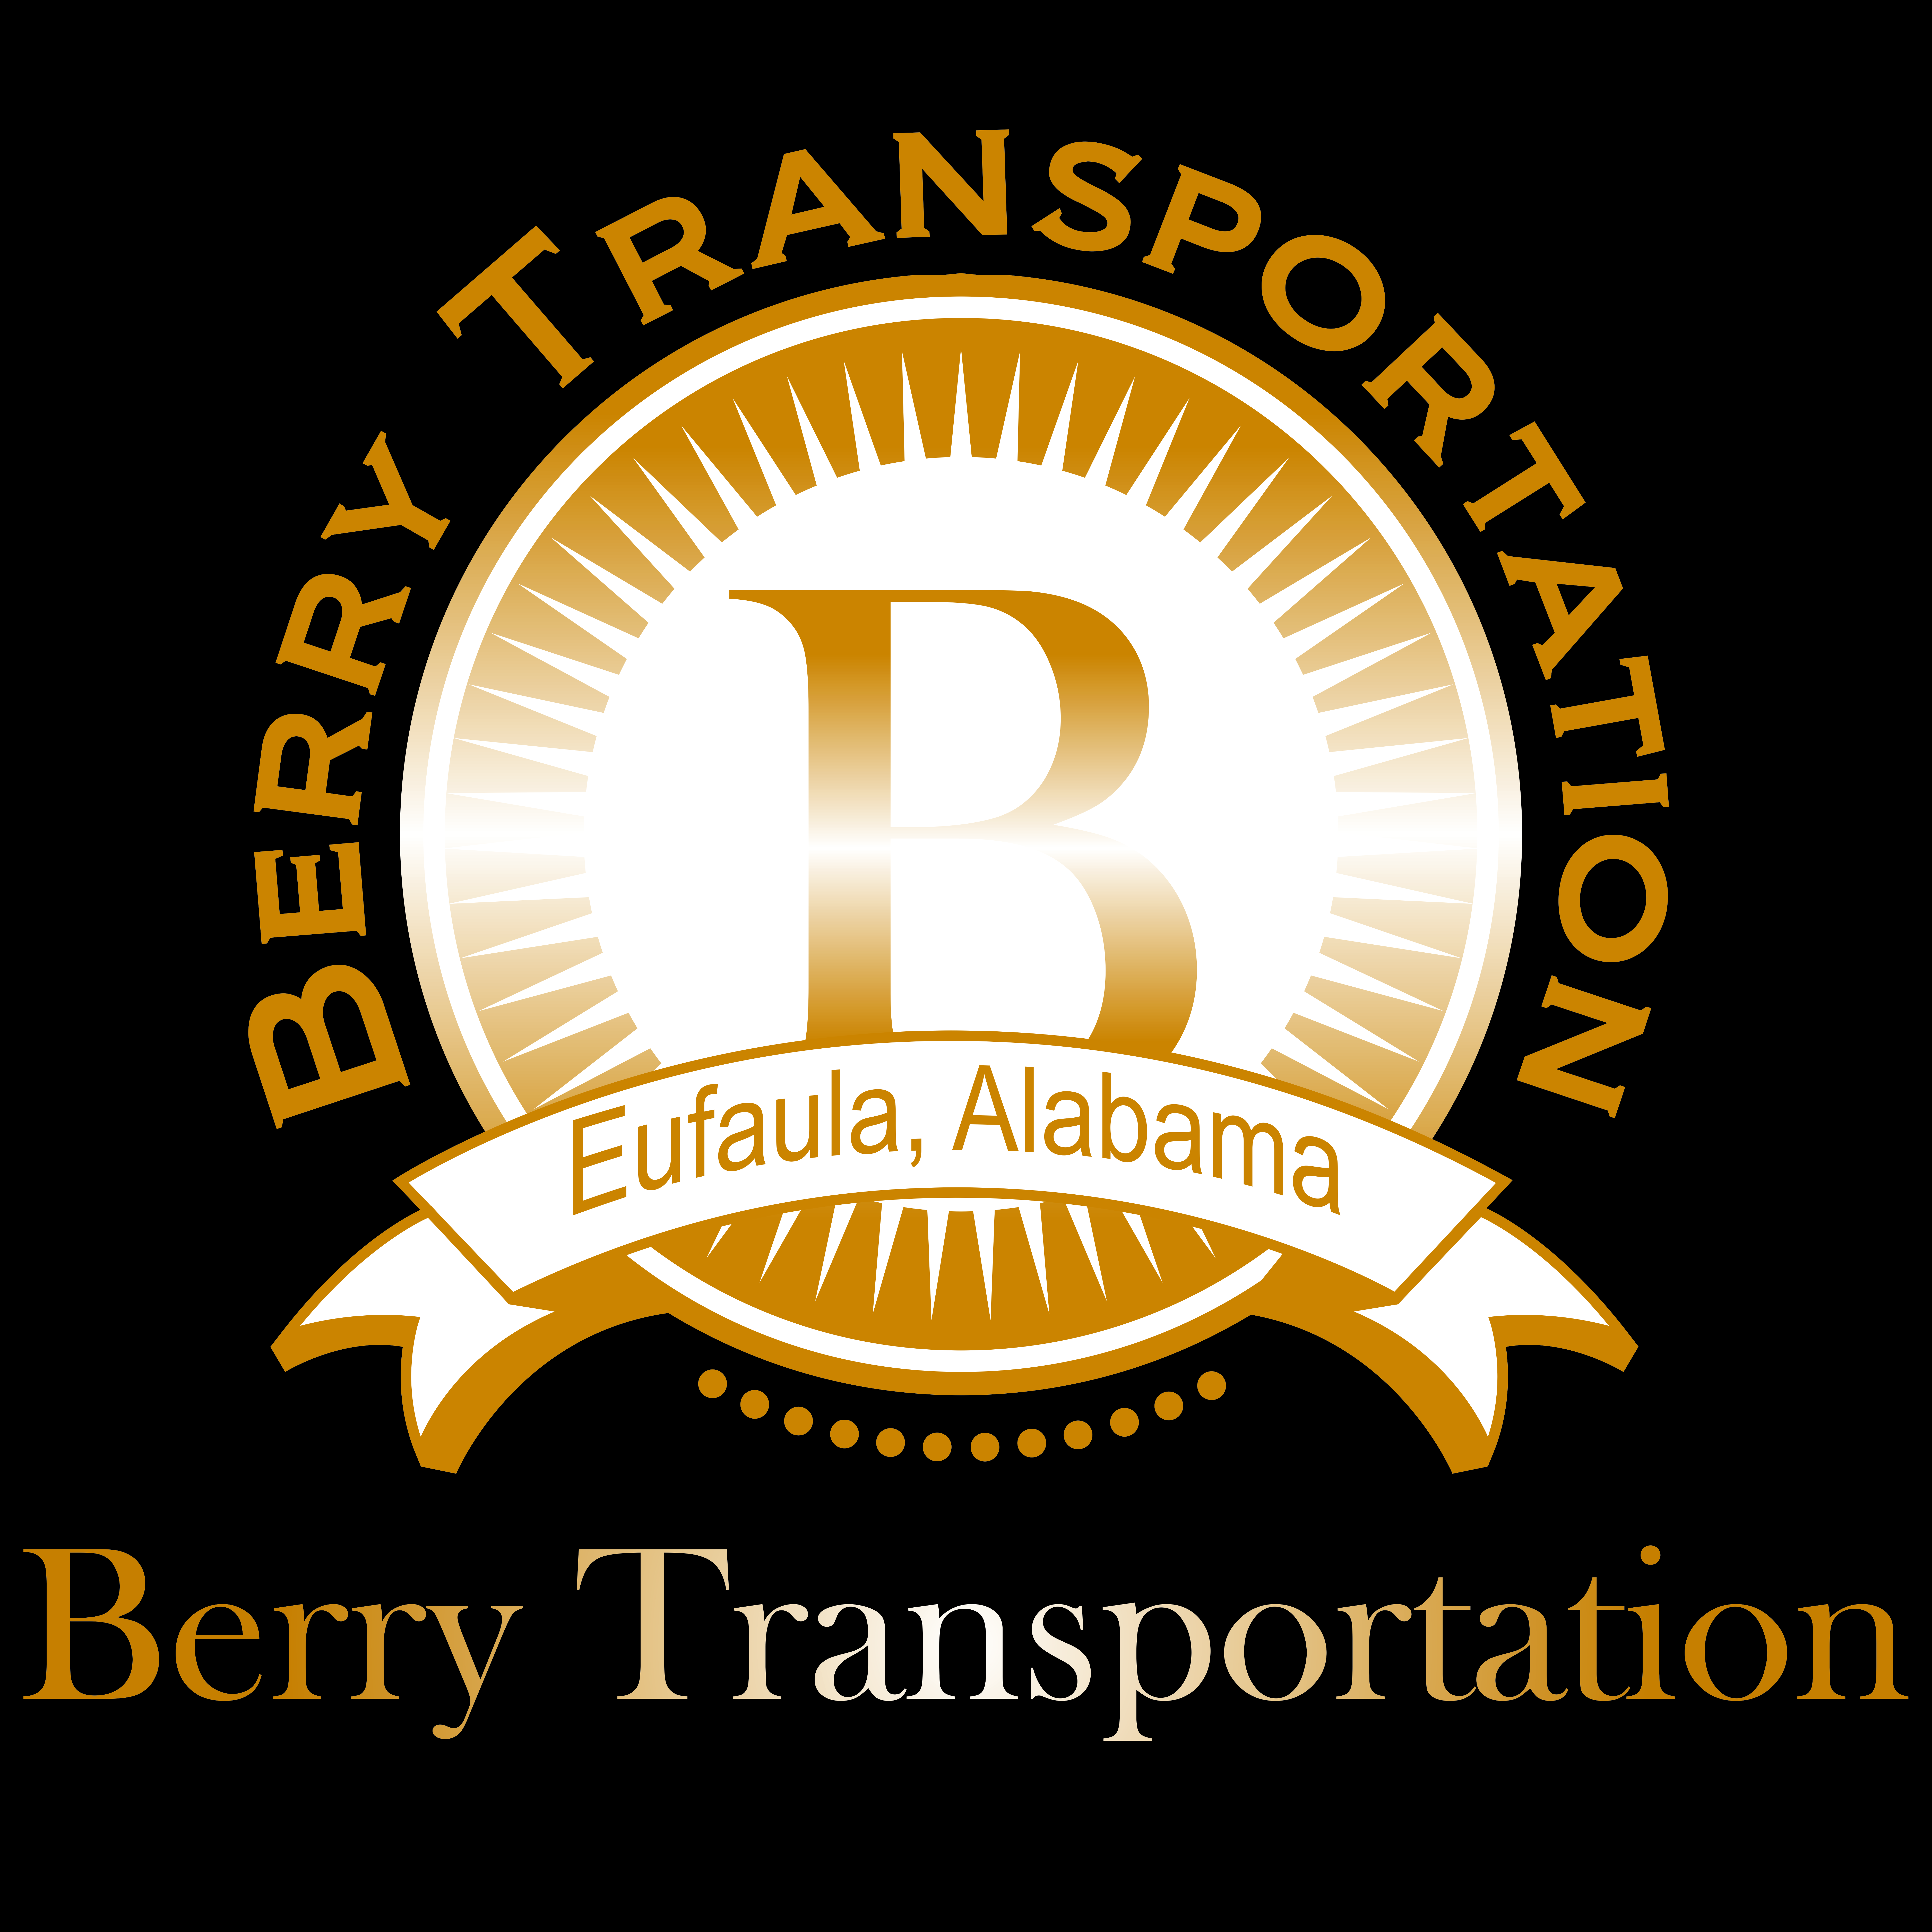 Berry Transportation